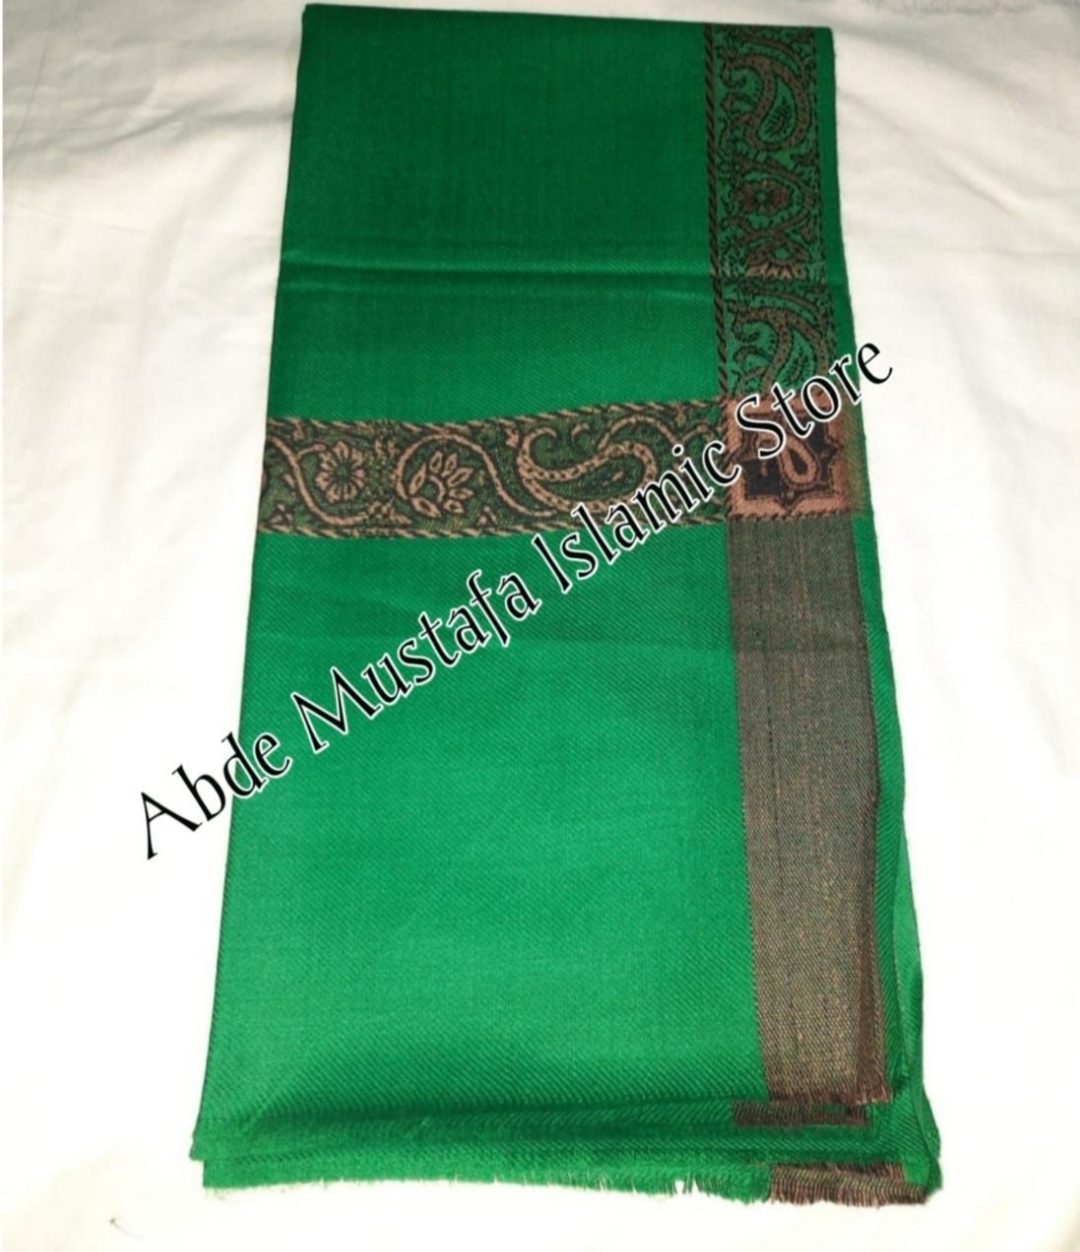 Original Kashmiri Showl Green Colour Best Quality Fabric and beautiful embroidery design